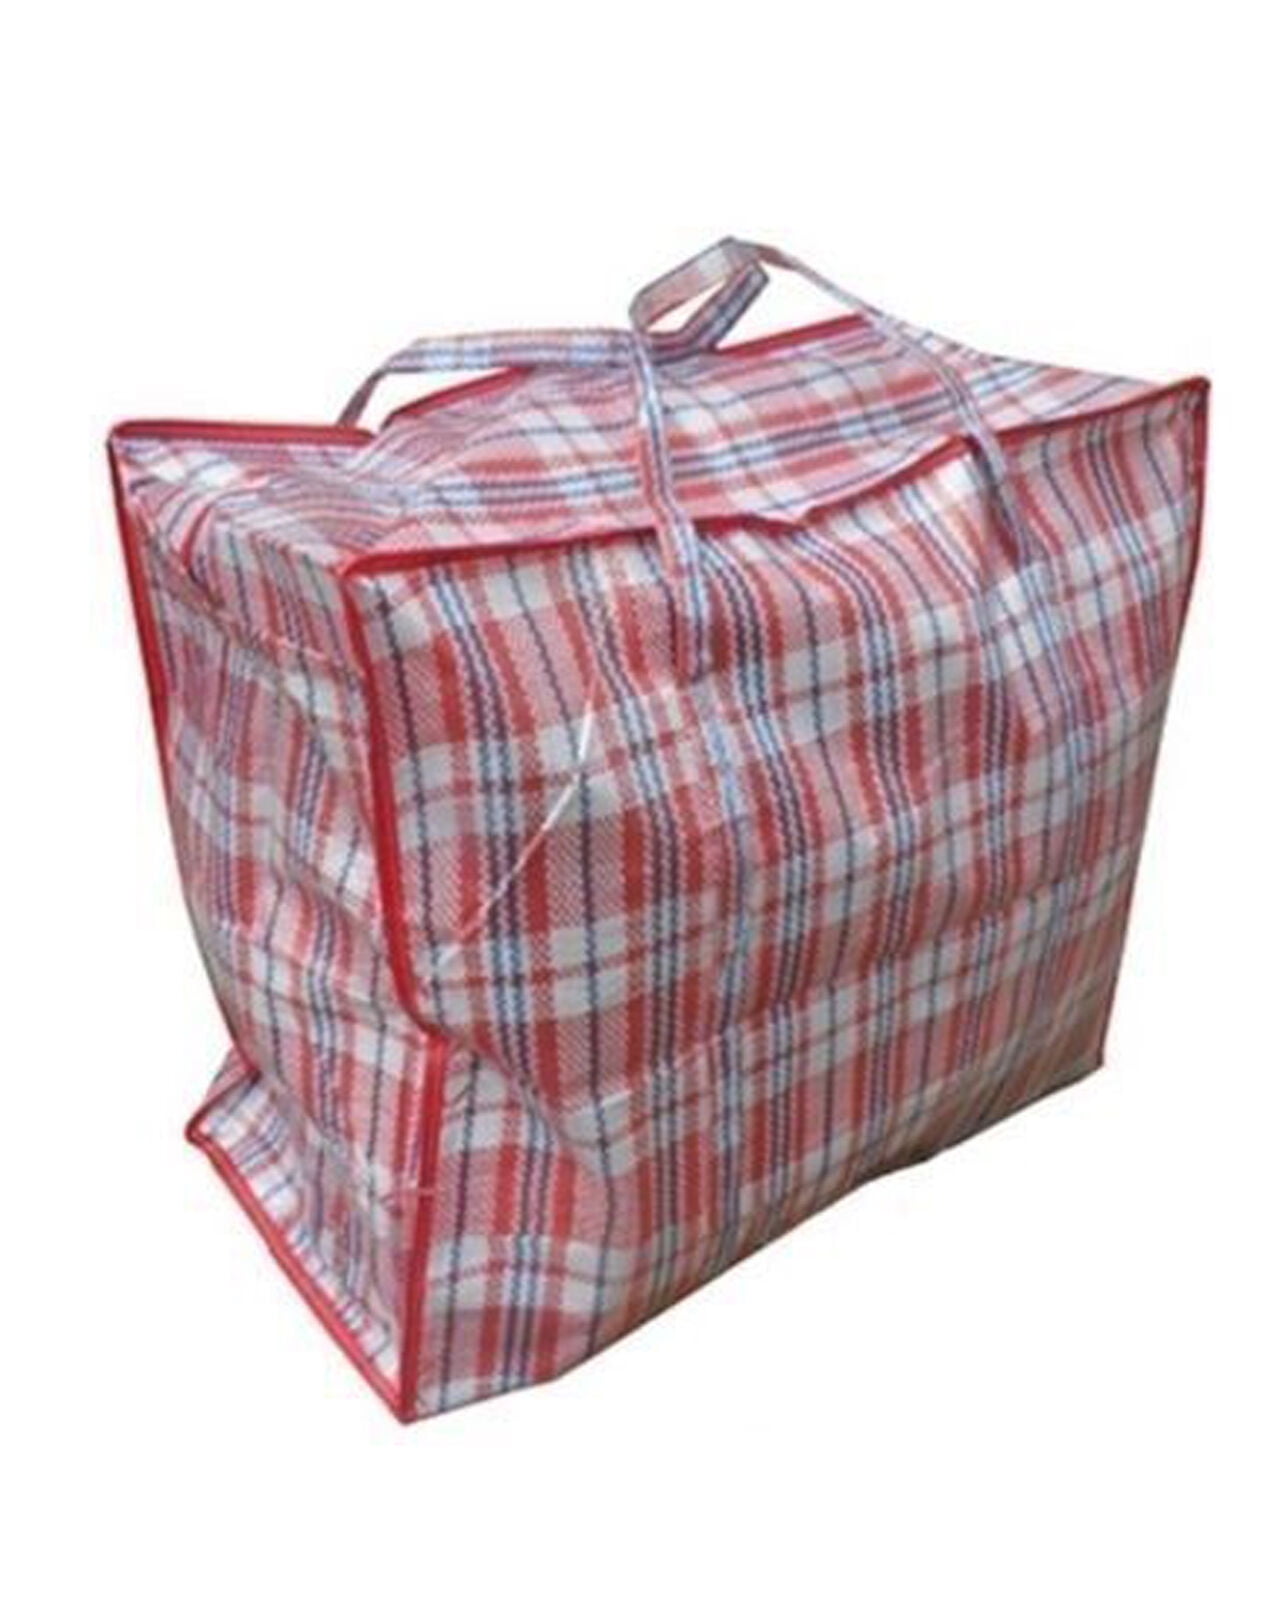 Jumbo LAUNDRY BAGS zipped reusable large strong shopping storage bag UK SELLER 